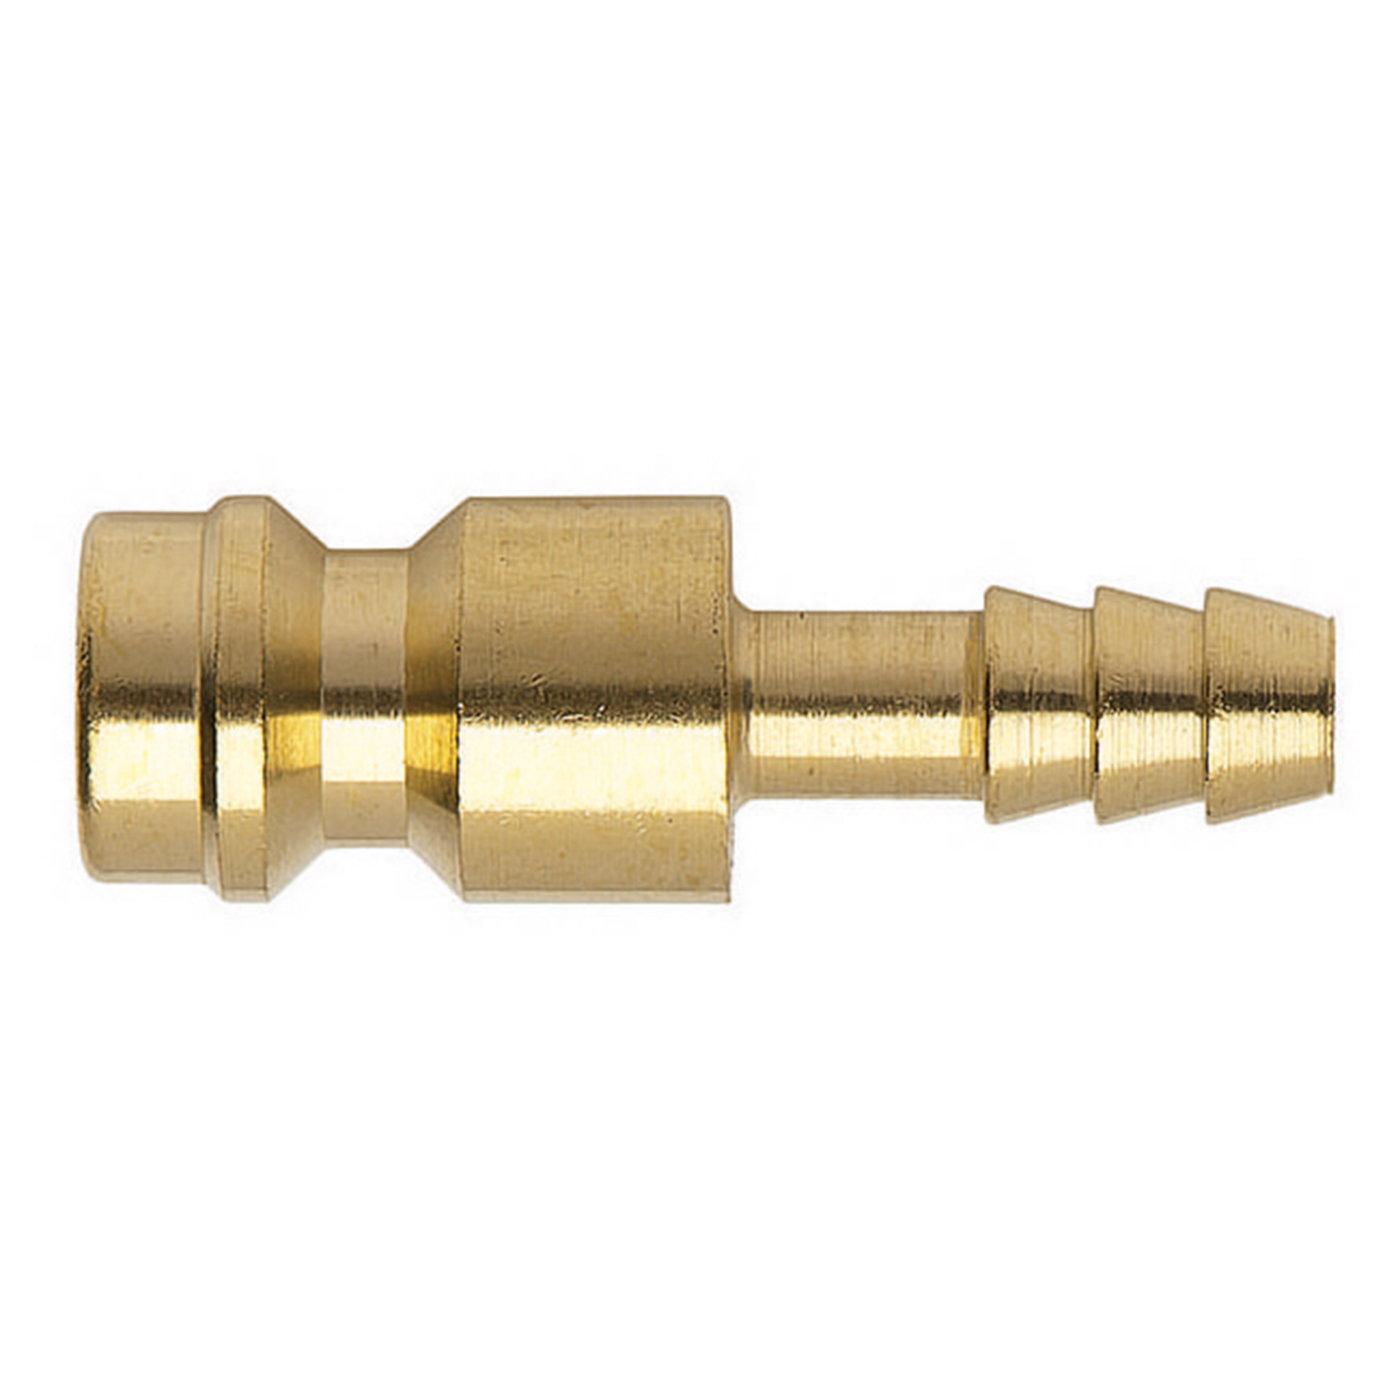 Plug DN 5 with Hose Nipple 4 mm - 1 piece